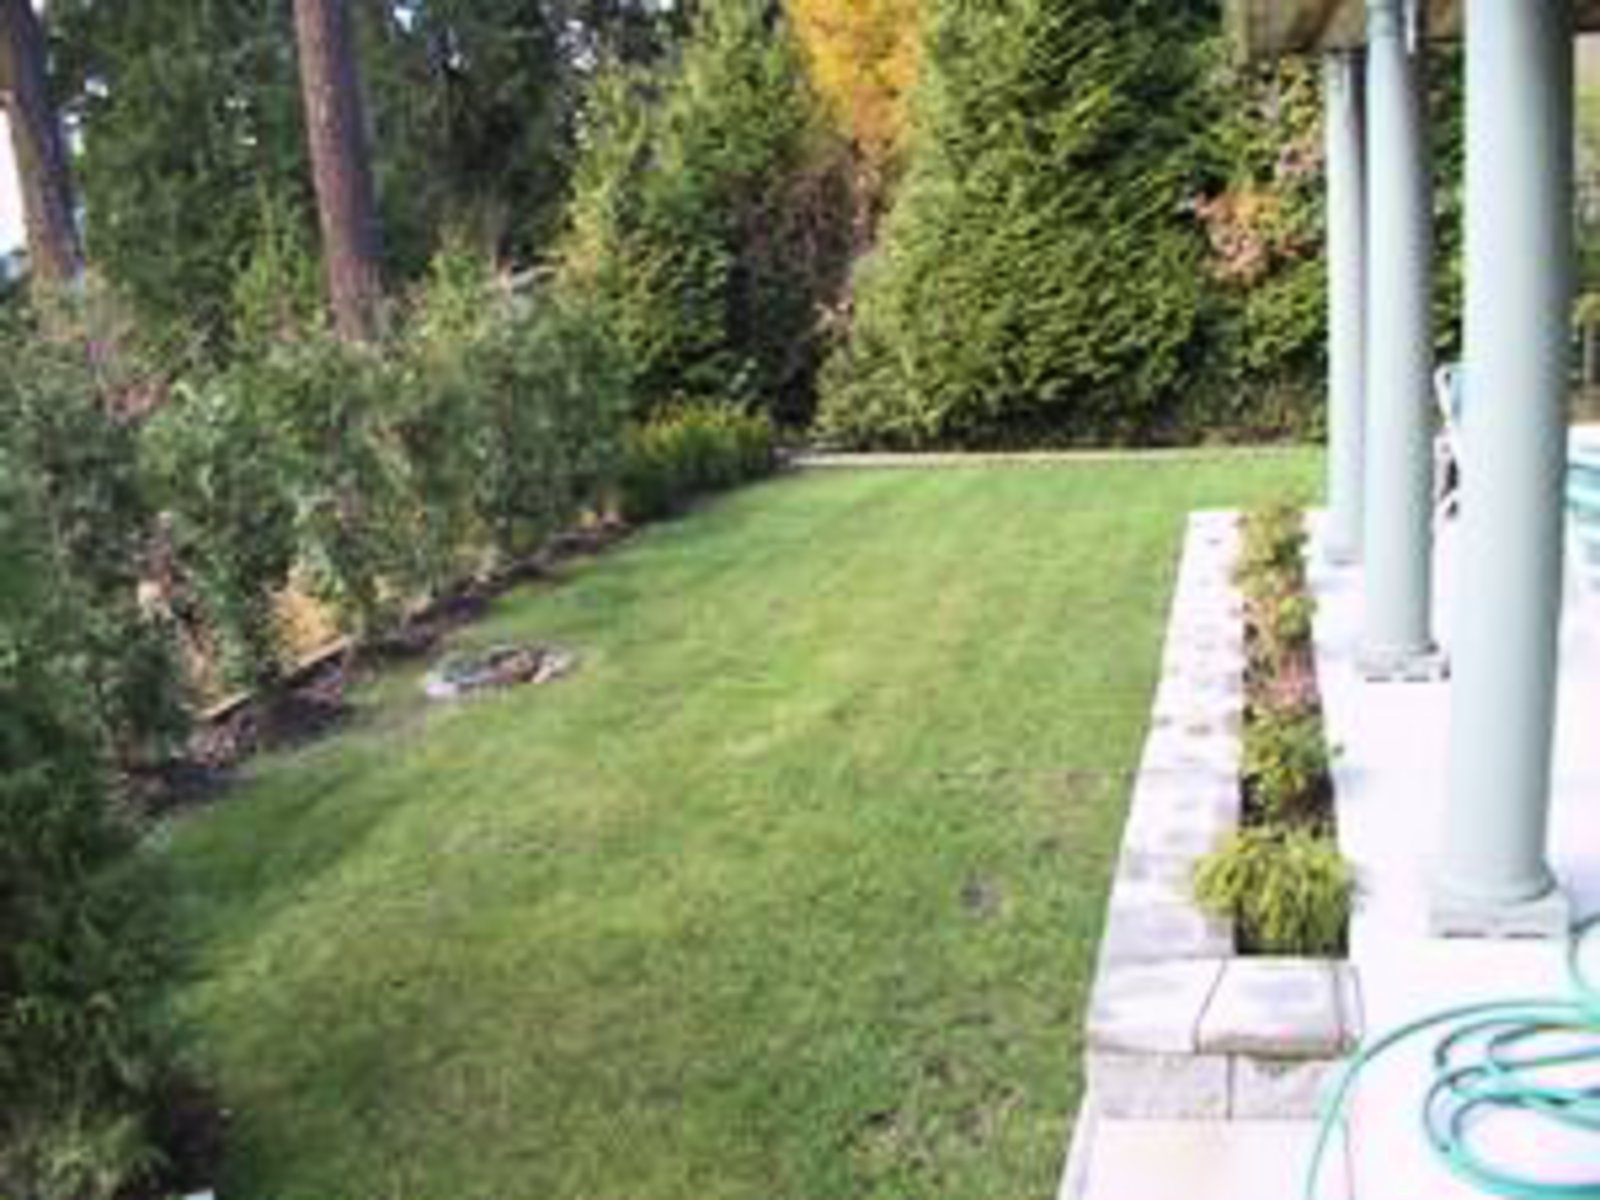 Level grass south facing yard